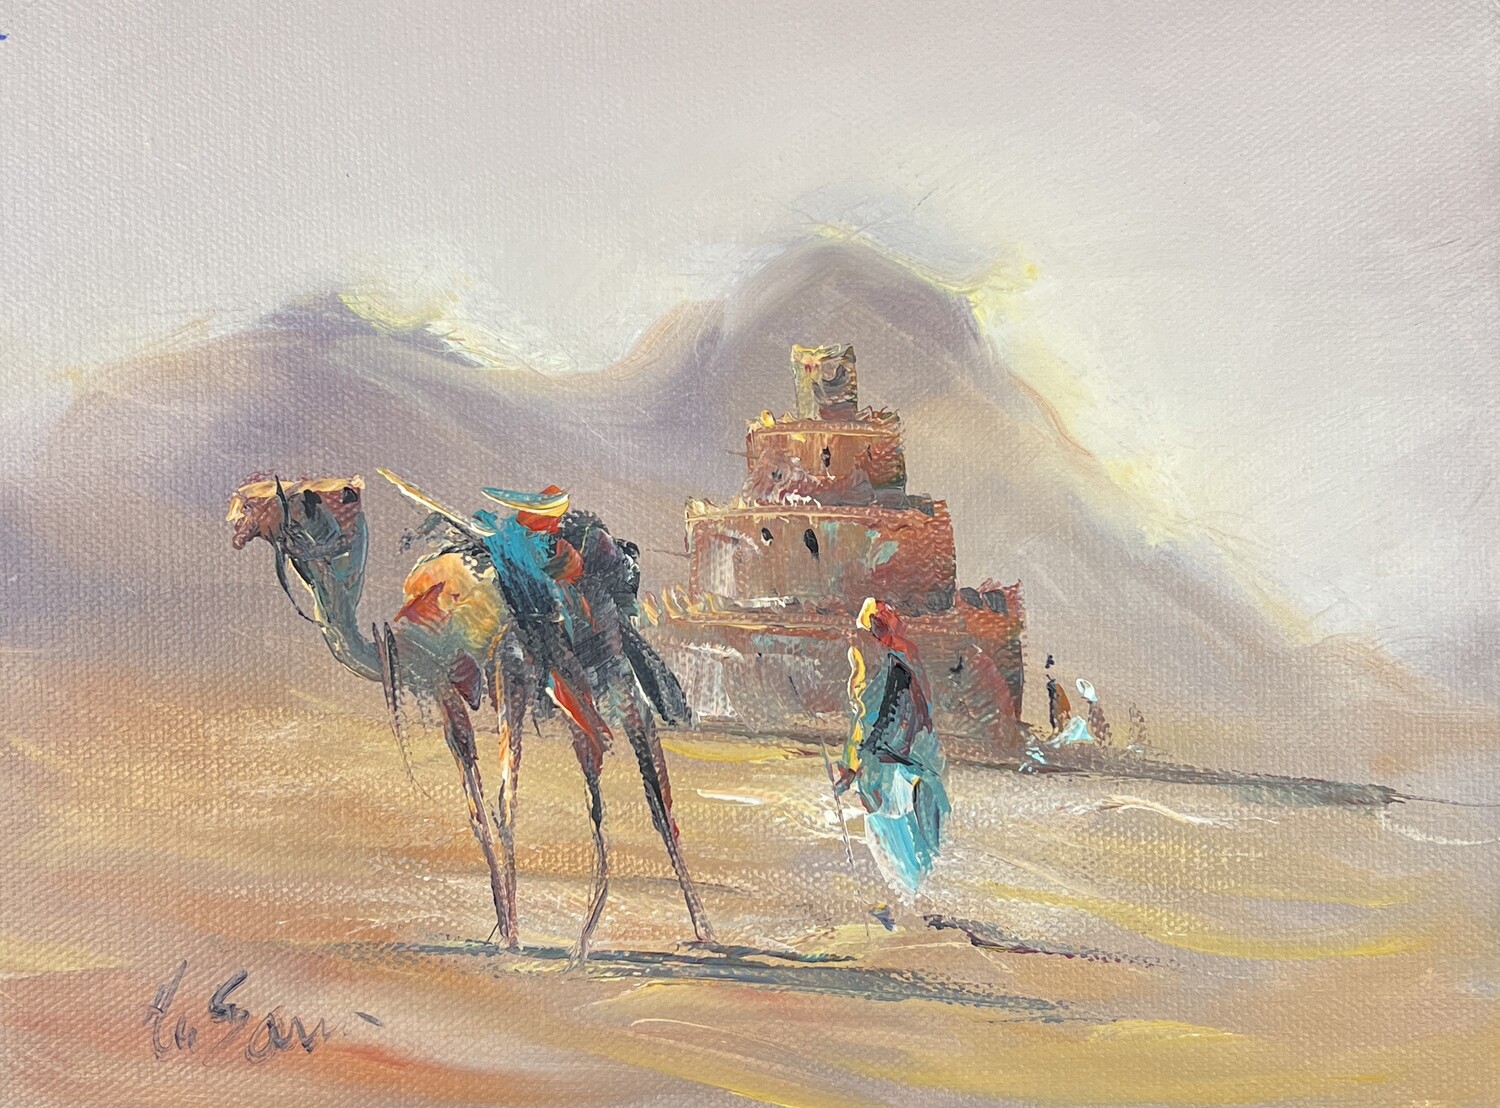 Bedouin, Camel & Mosque - Knife Art Oil Painting